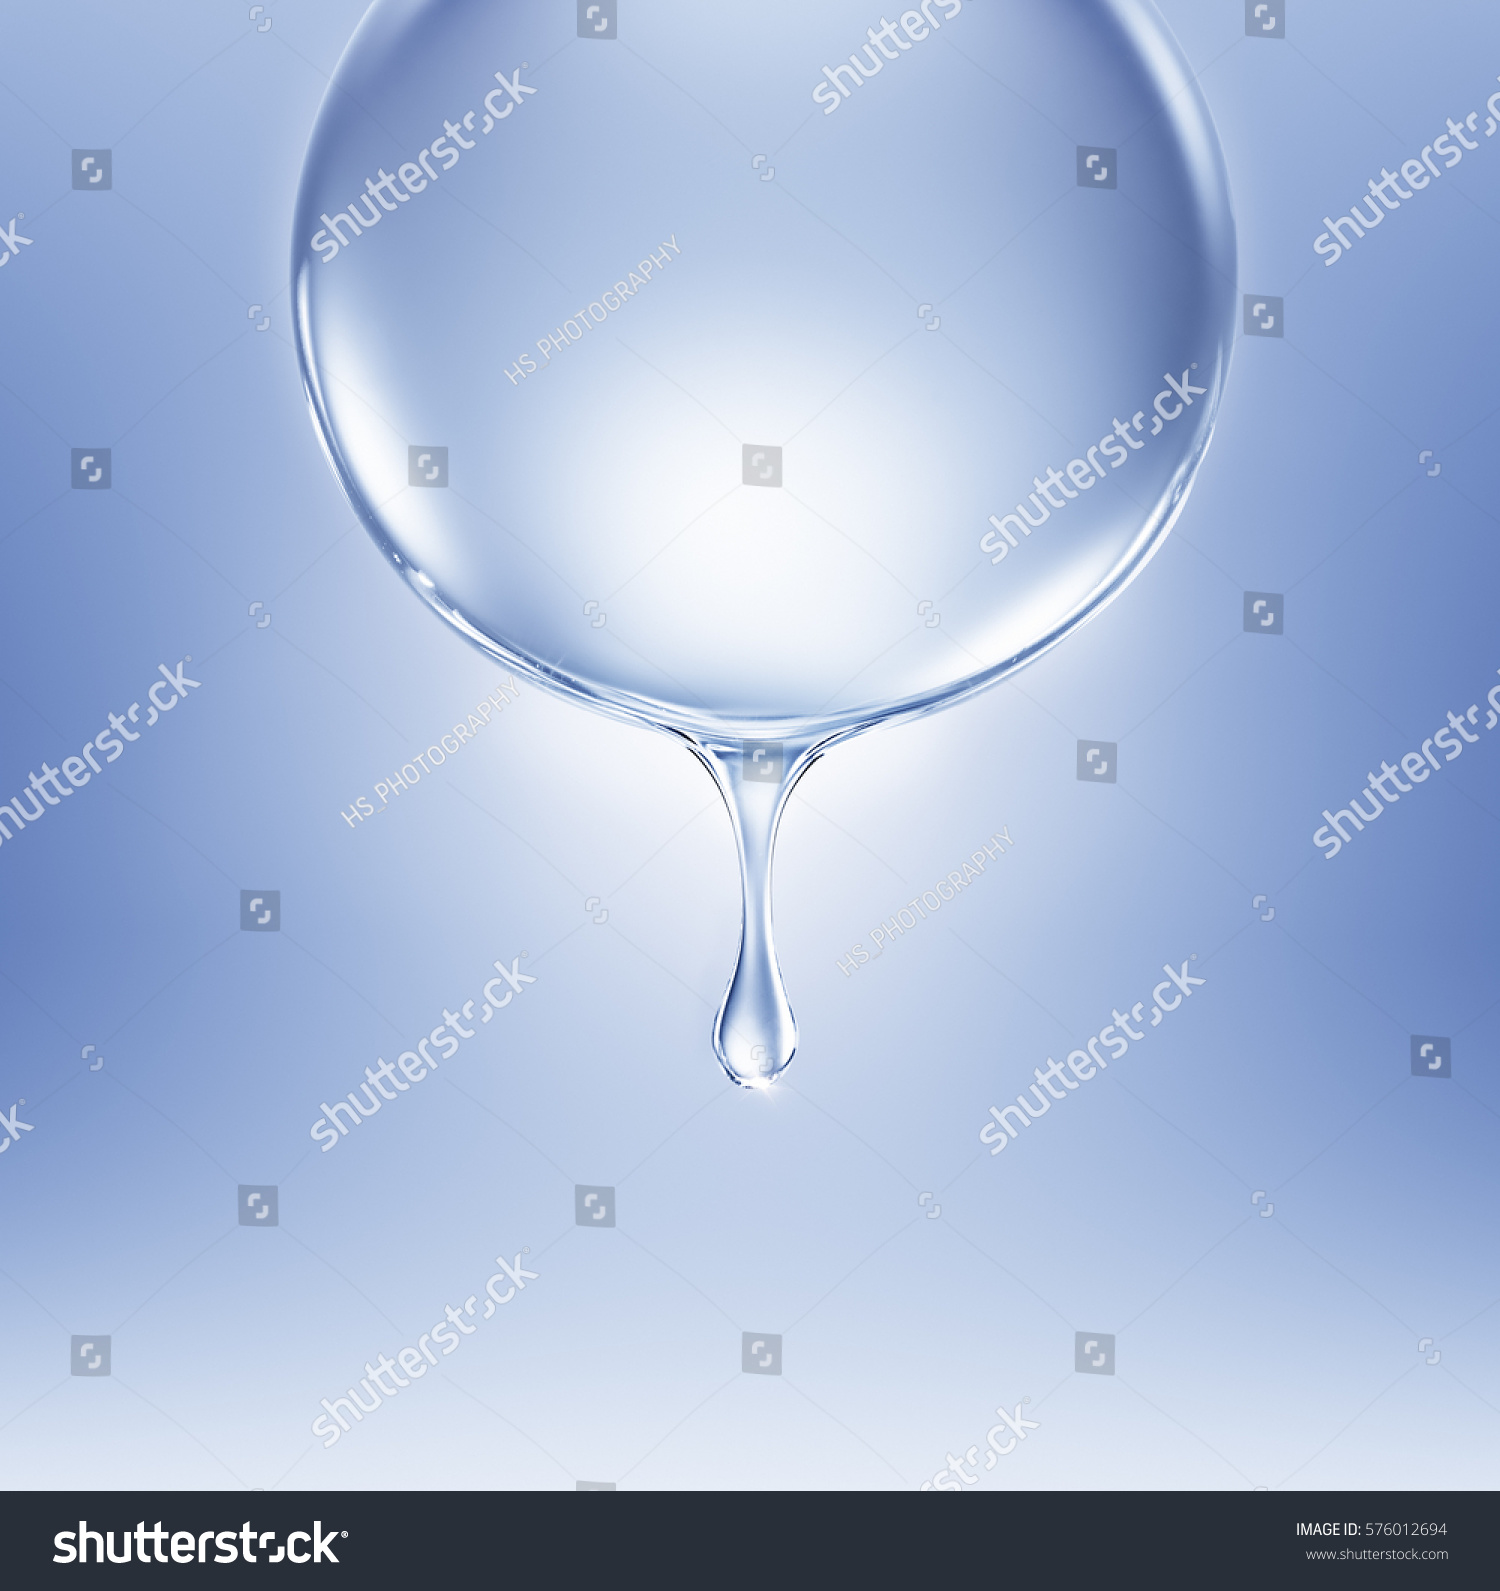 Drop of water #576012694